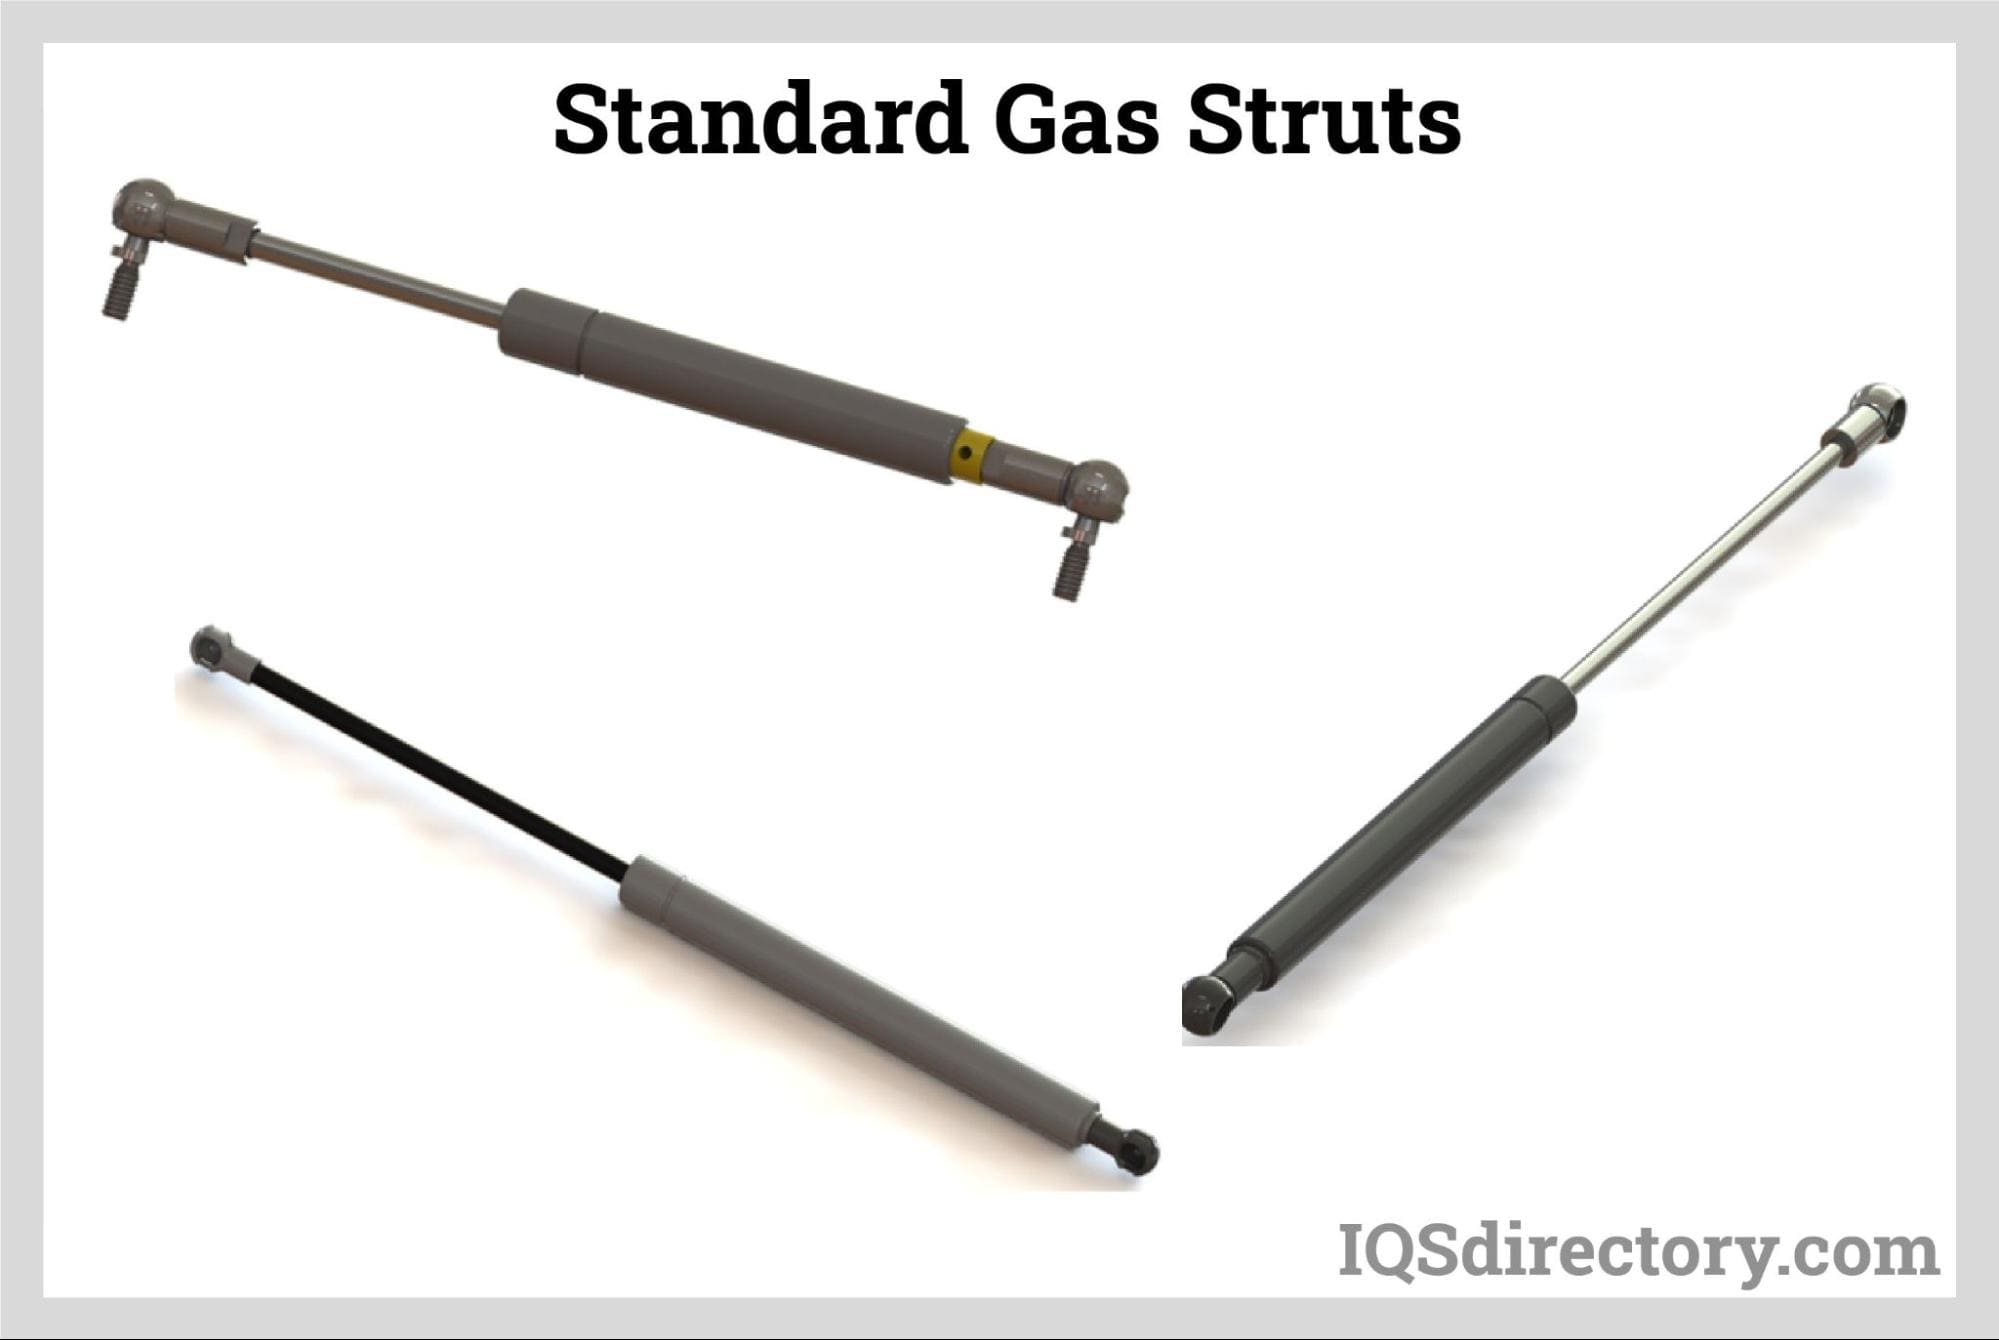 Standard Gas Struts